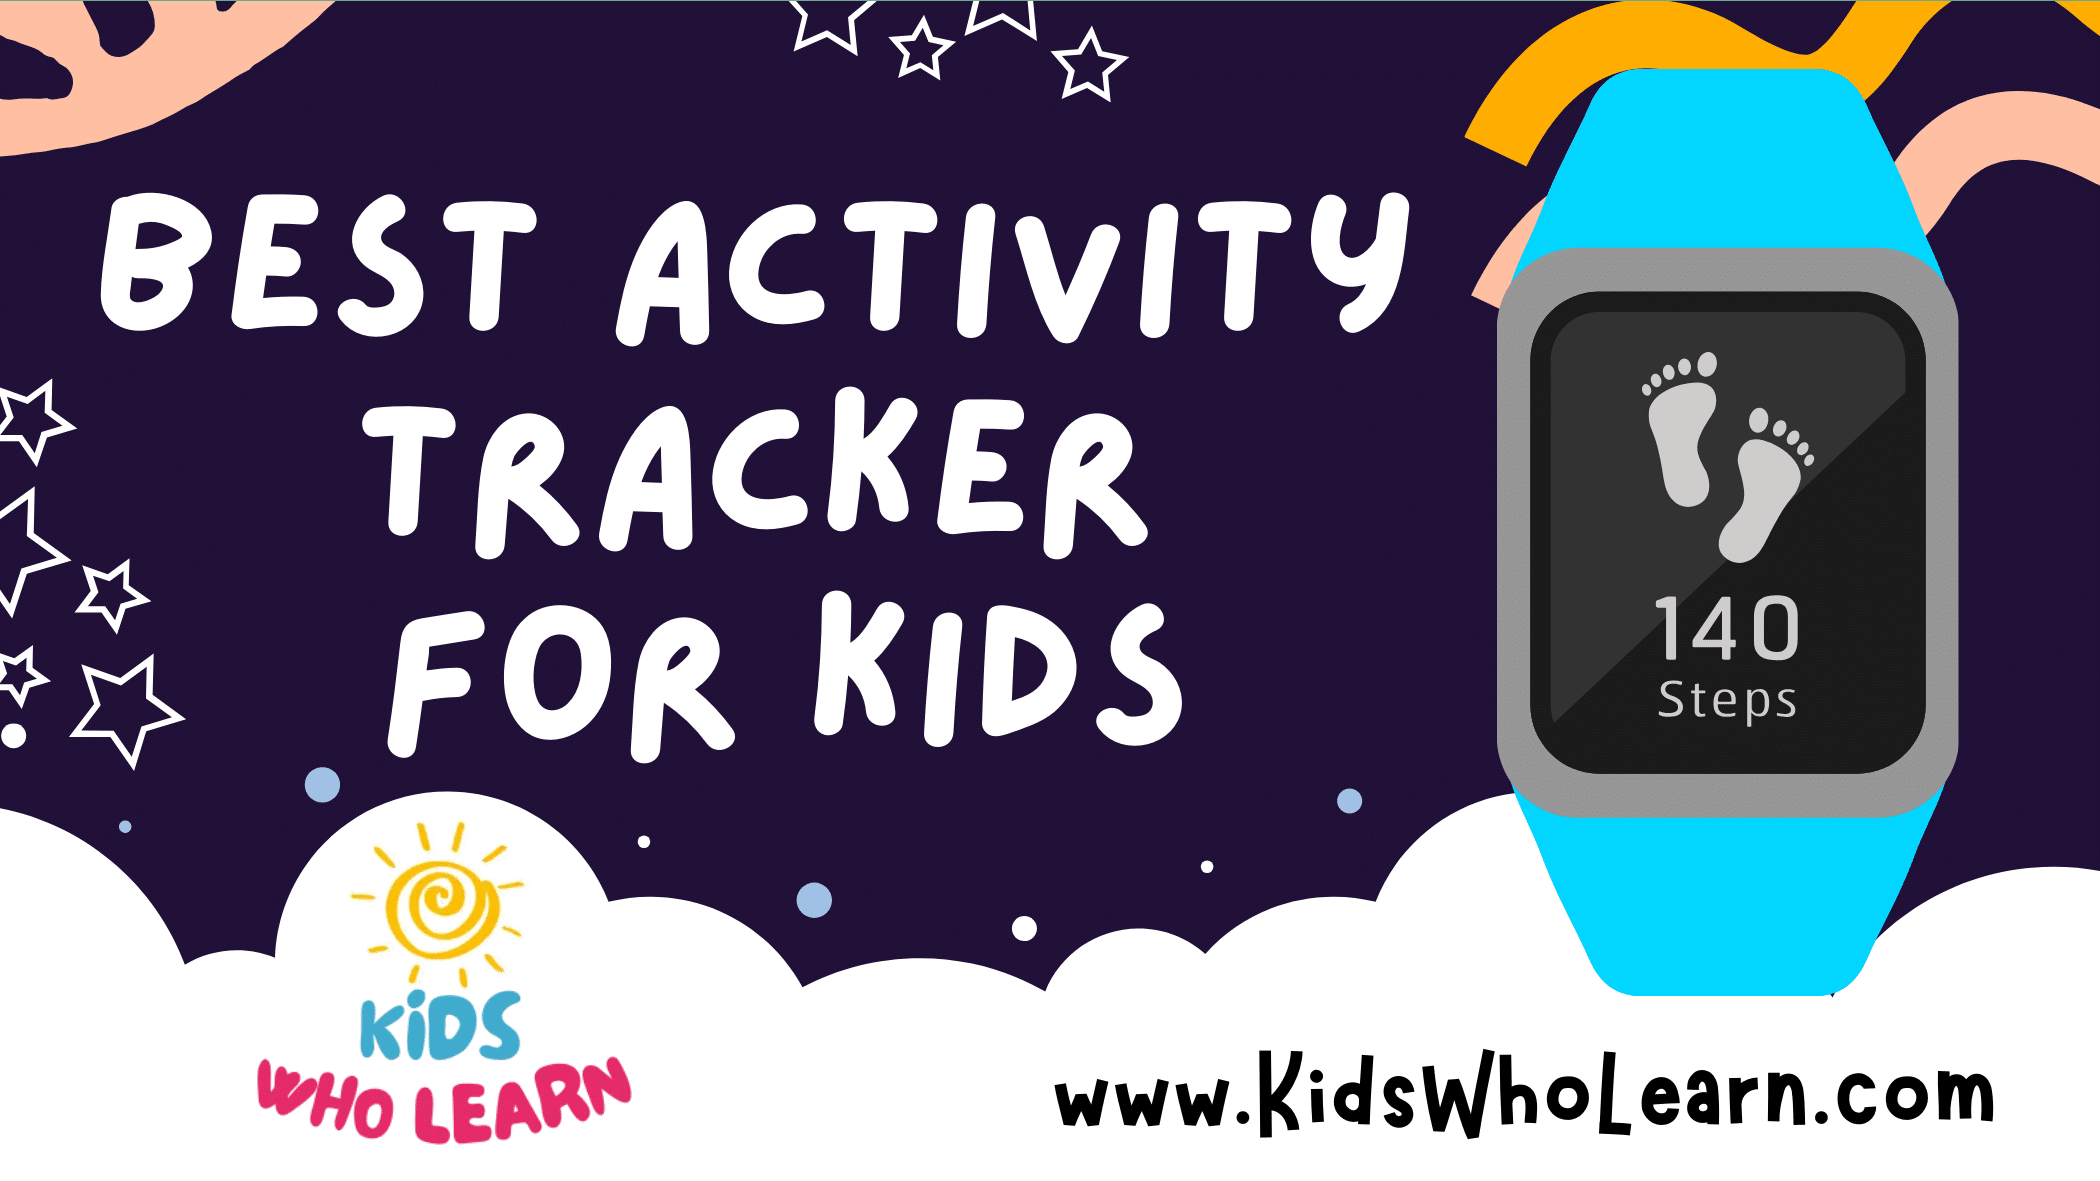 Best Activity Tracker For Kids